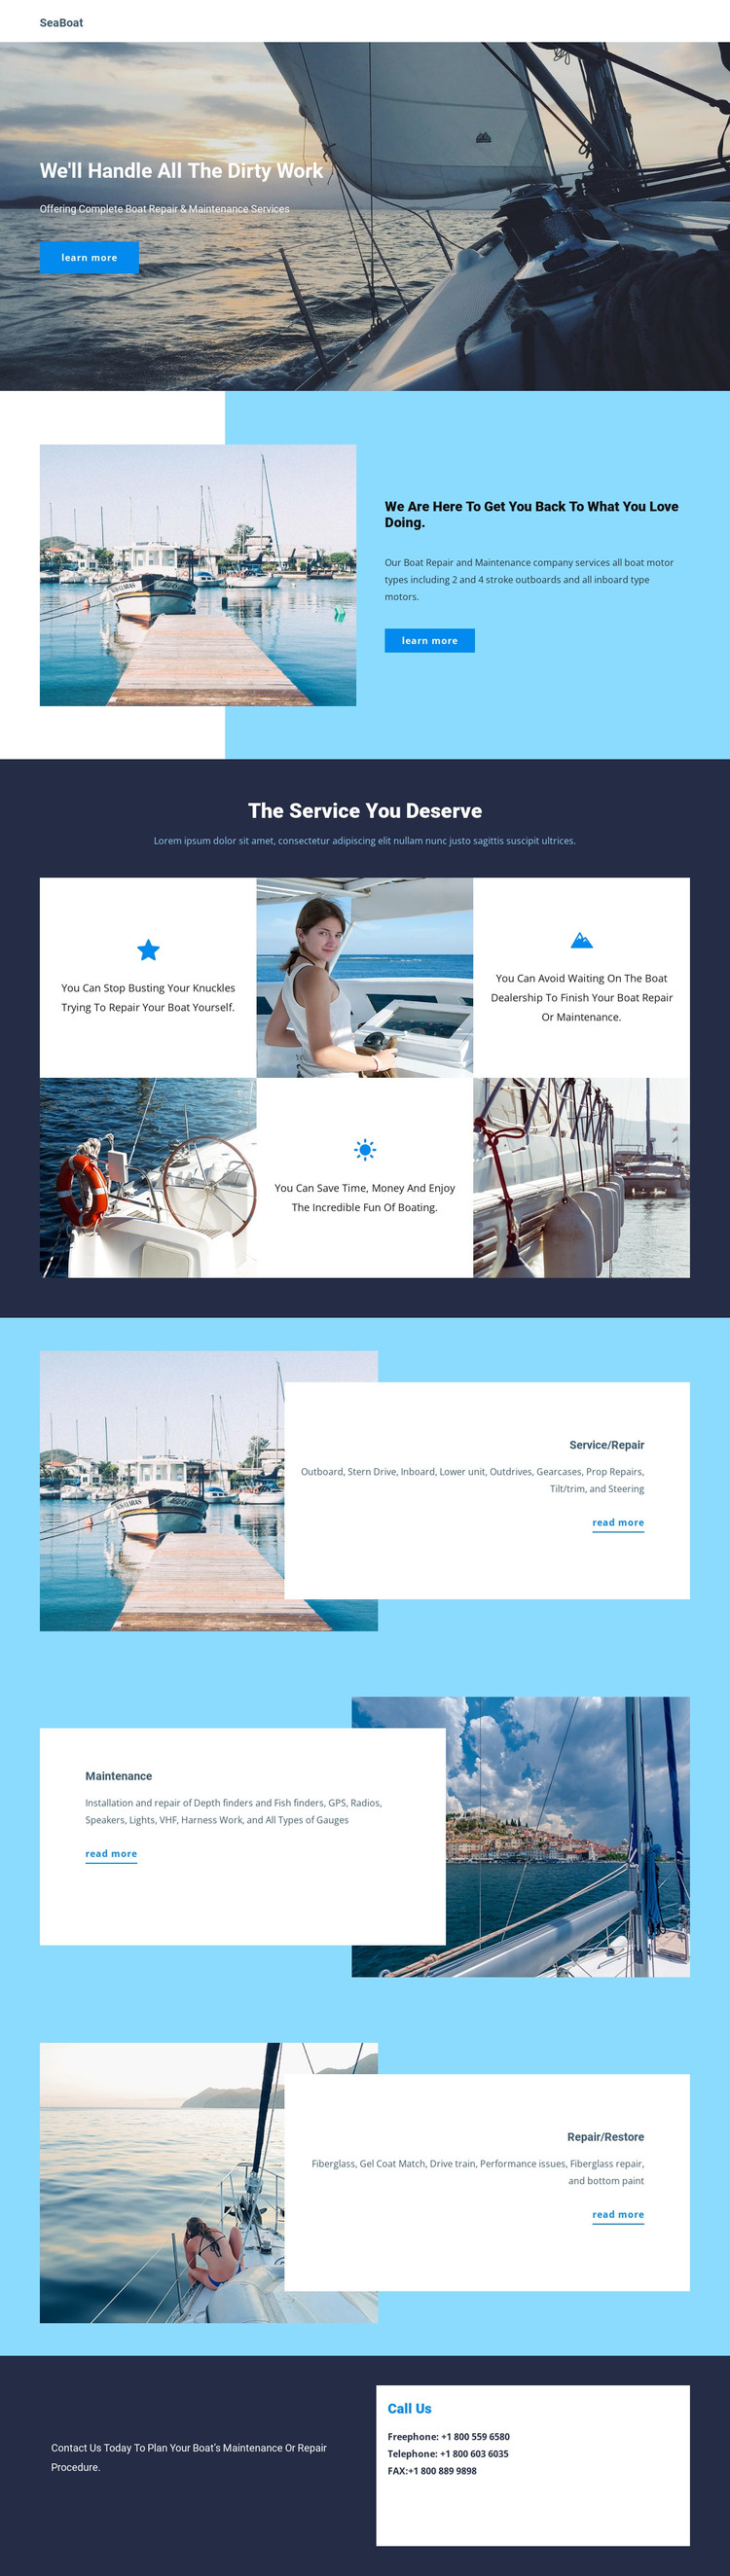 Travel on Seaboat WordPress Theme